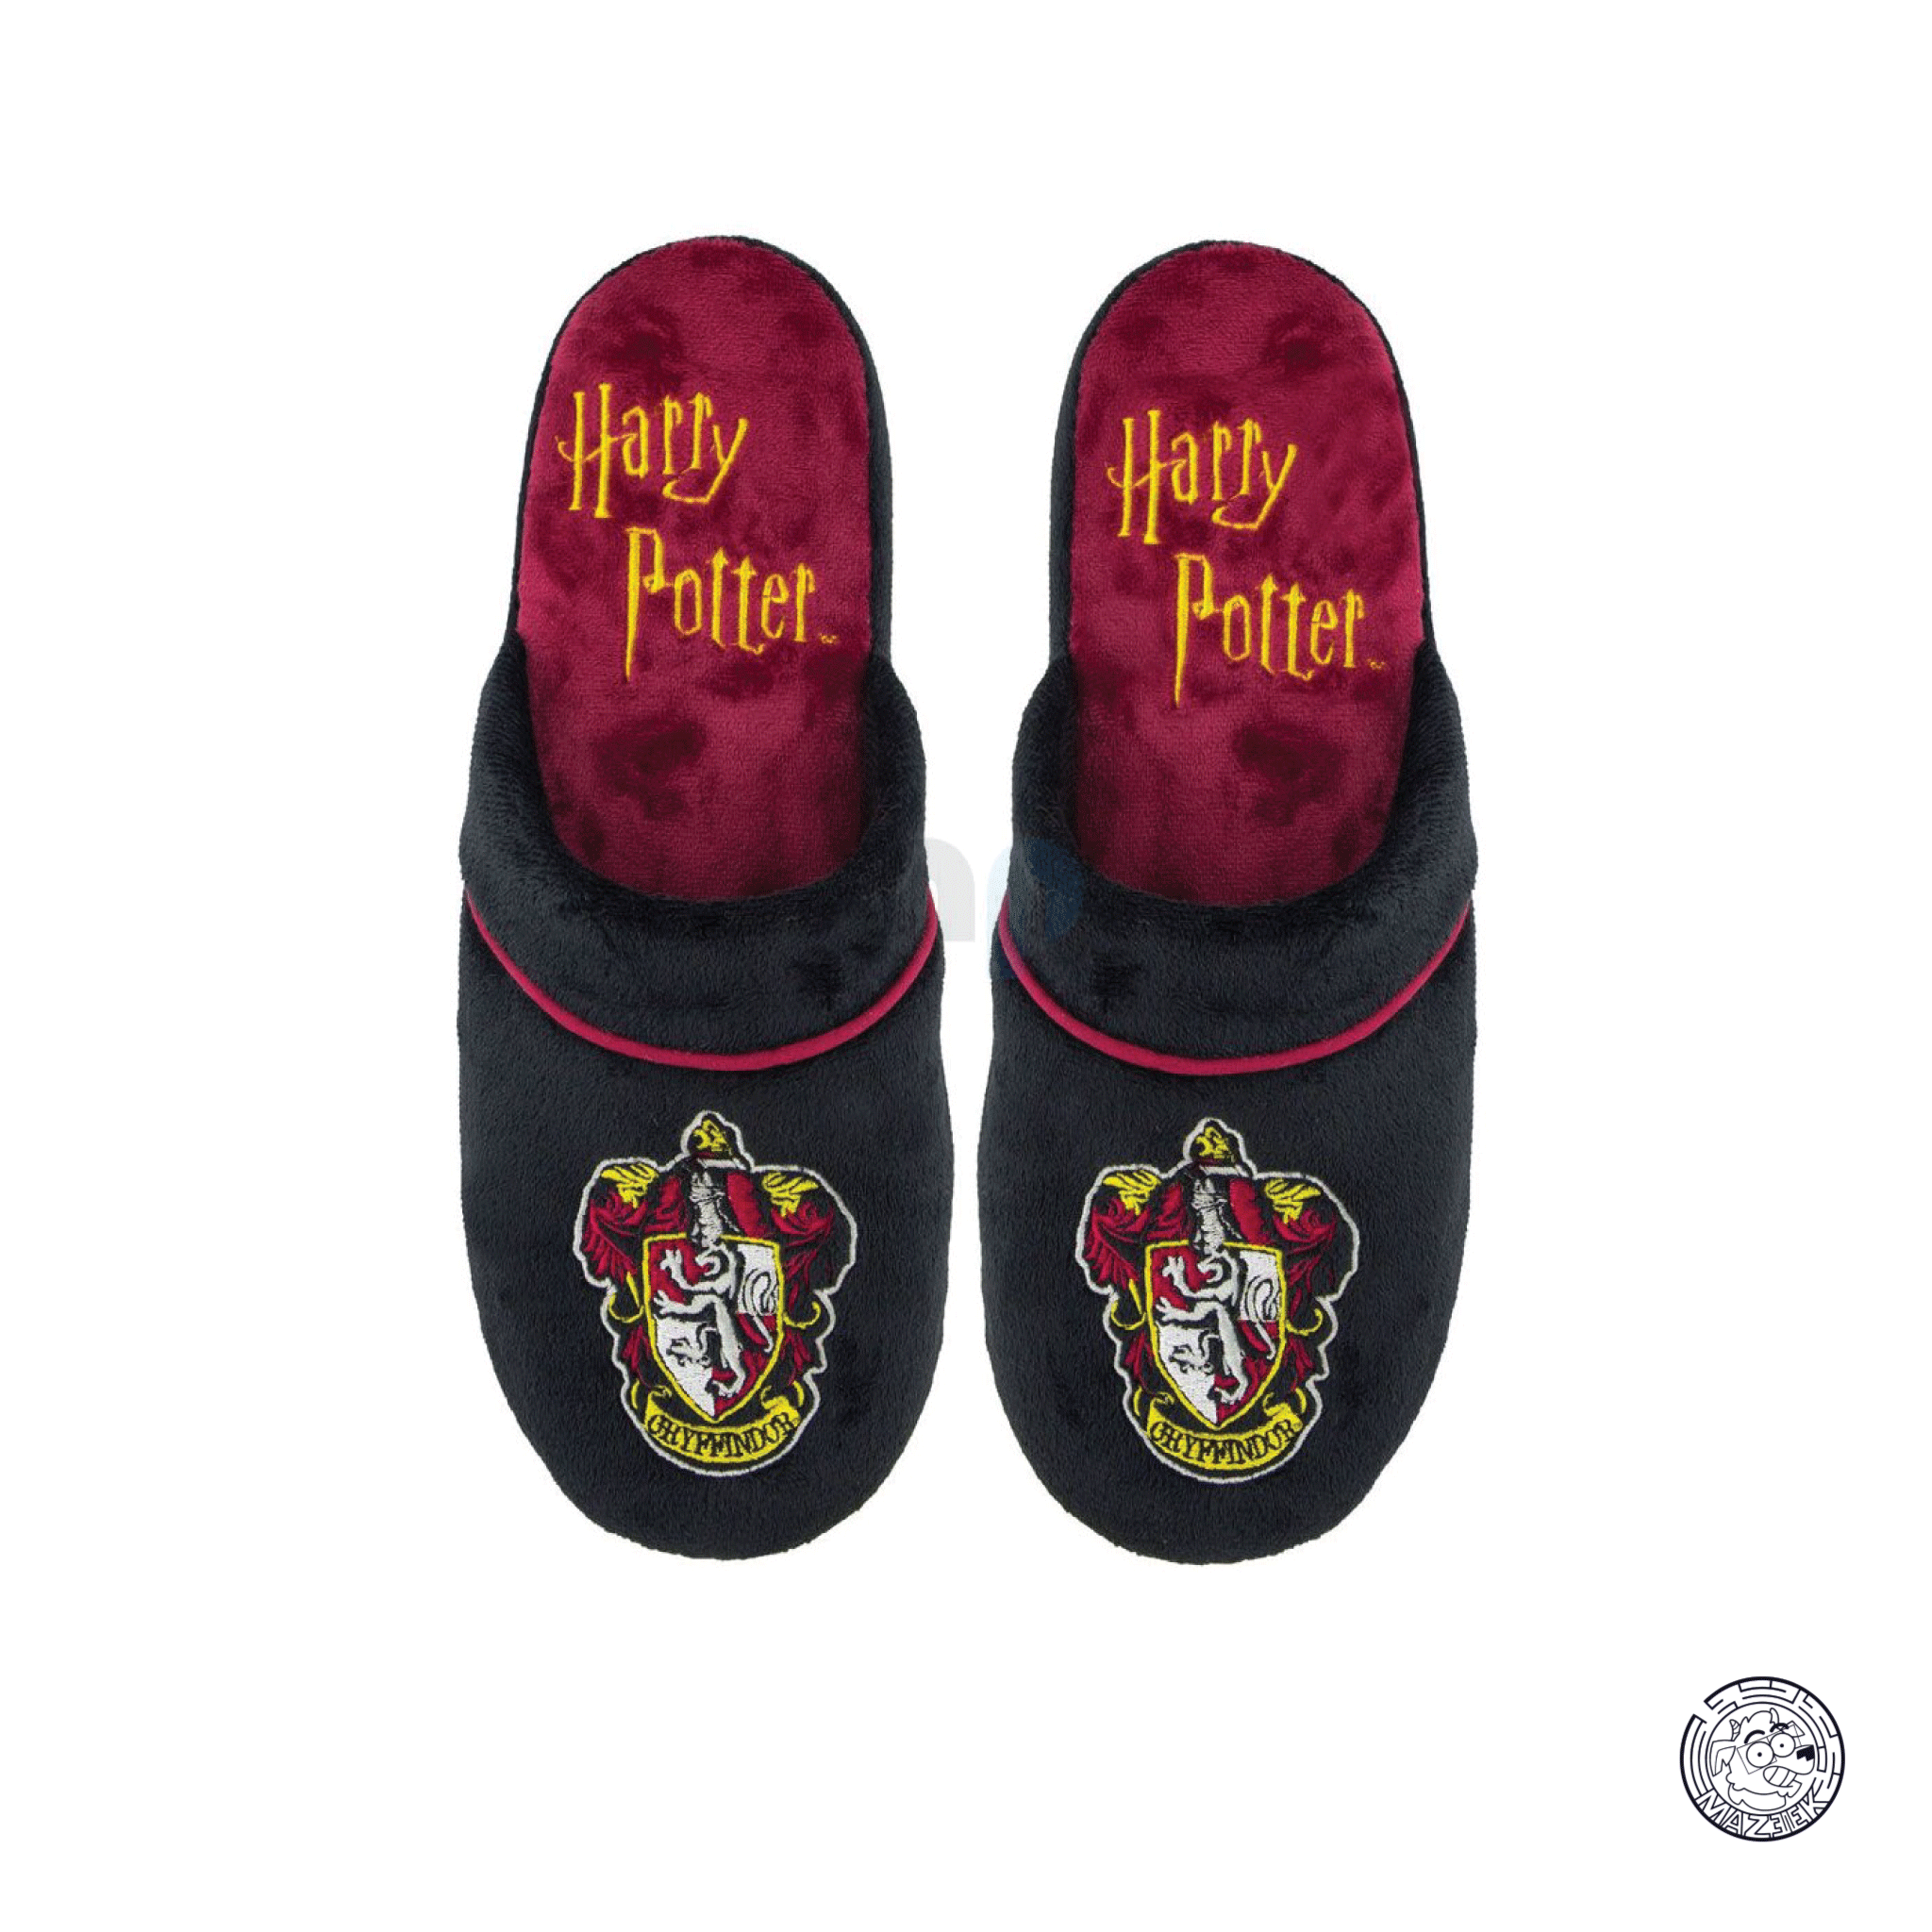 Pantofole - Harry Potter: Grifondoro (Taglia M/L)